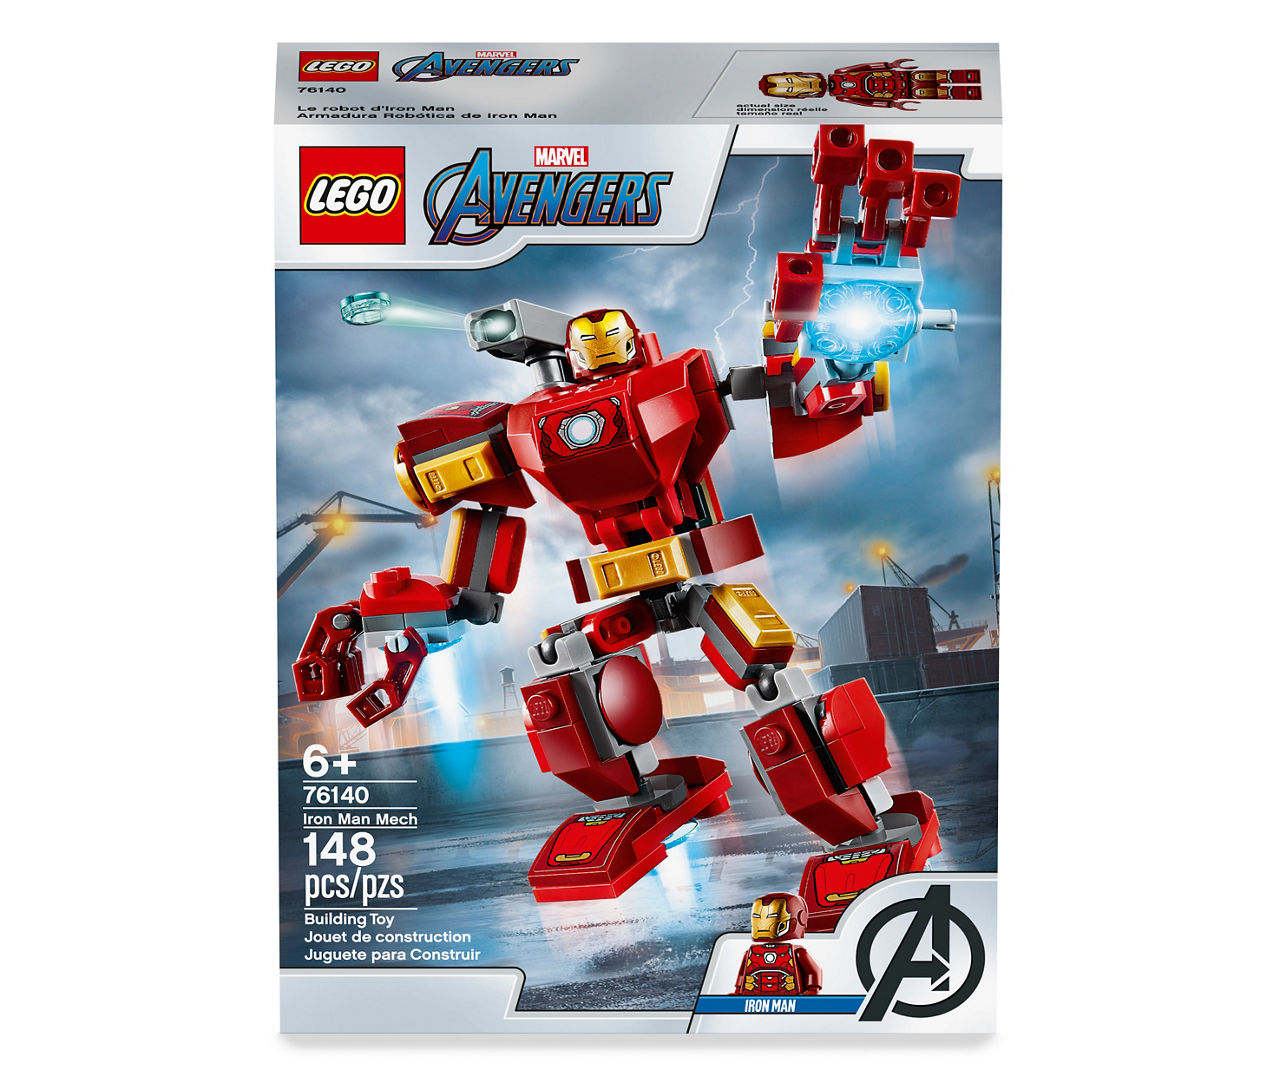 LEGO Marvel Avengers Iron Man Mech 76140 Kids’ Superhero Mech Figure 148 Pieces New 2020 Building Toy with Iron Man Mech and Minifigure 